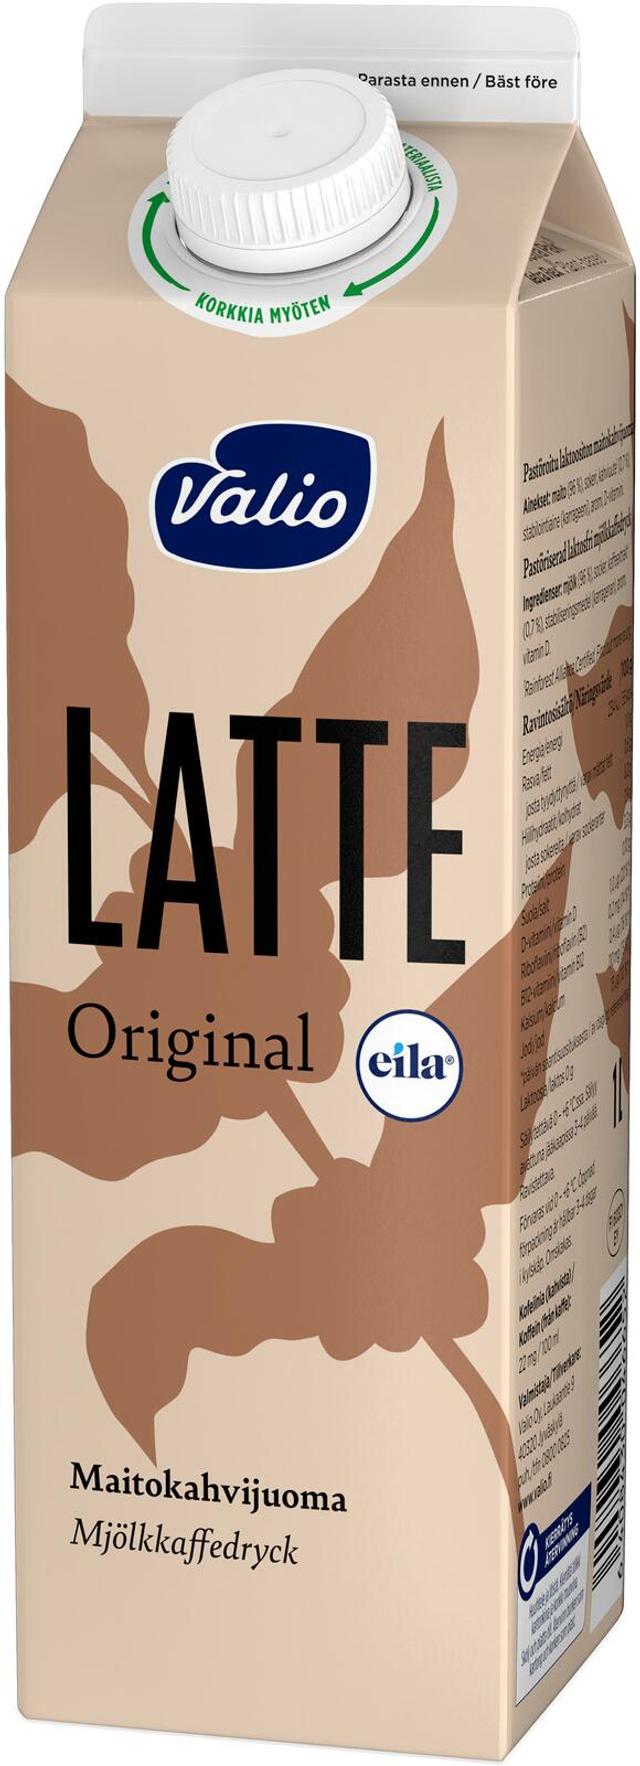 Valio Eila® Latte original maitokahvijuoma 1 l laktoositon